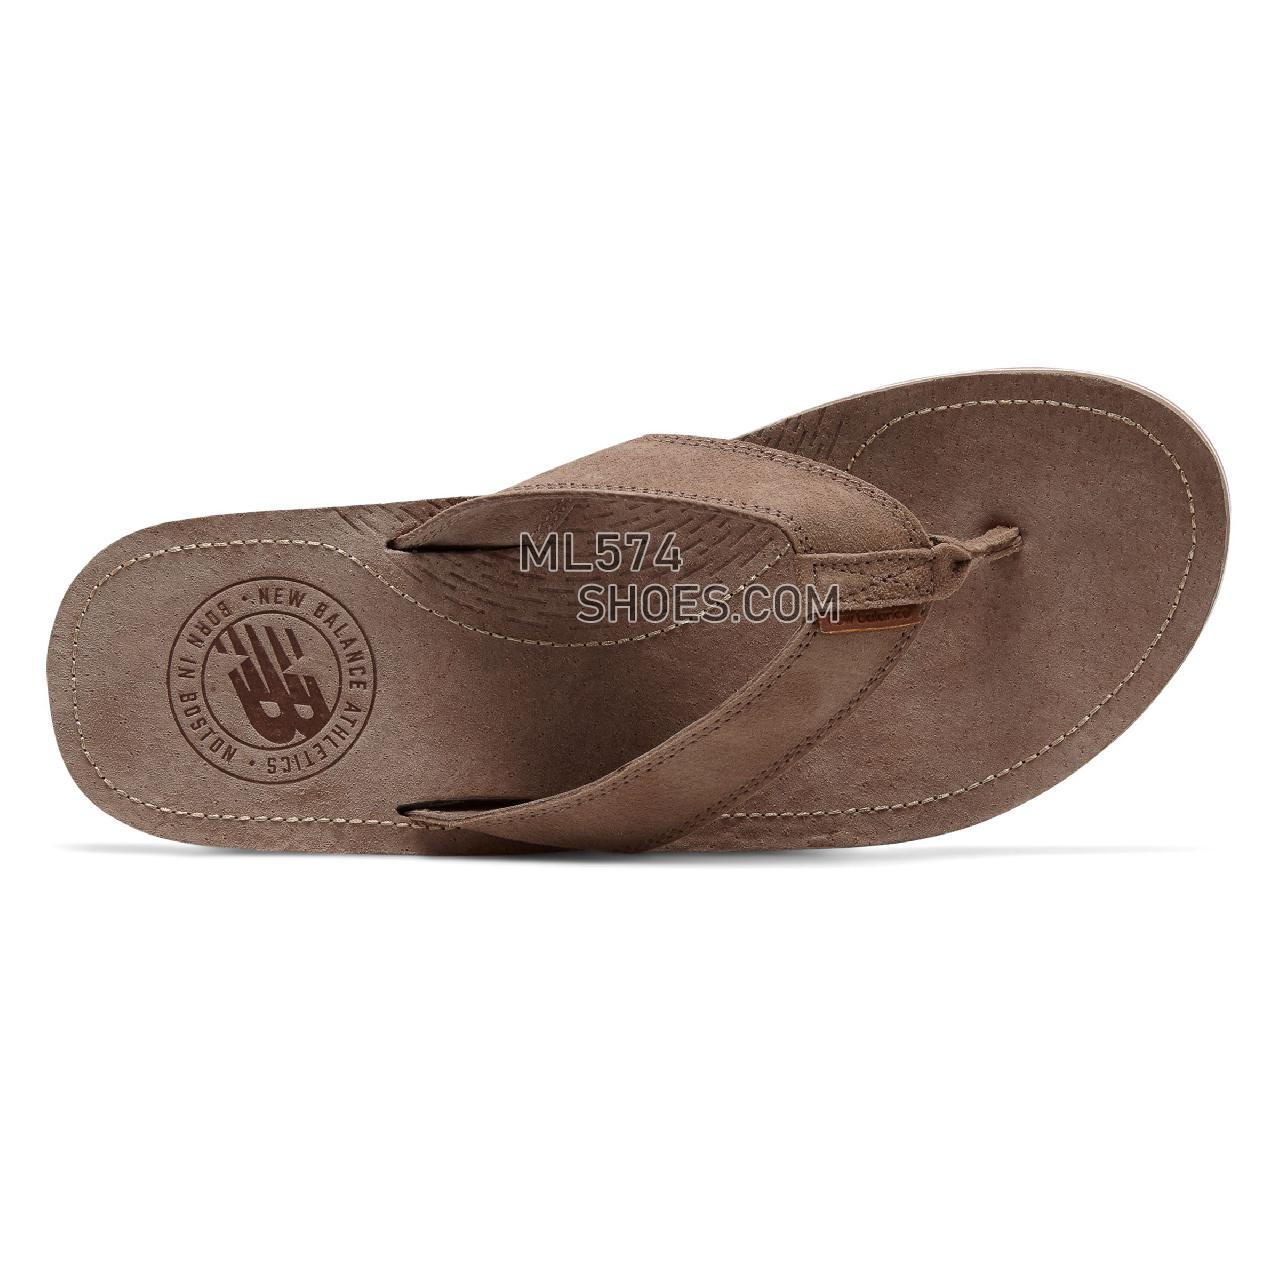 New Balance Classic Thong - Men's 6078 - Sandals Tan with Gum - M6078BRGM